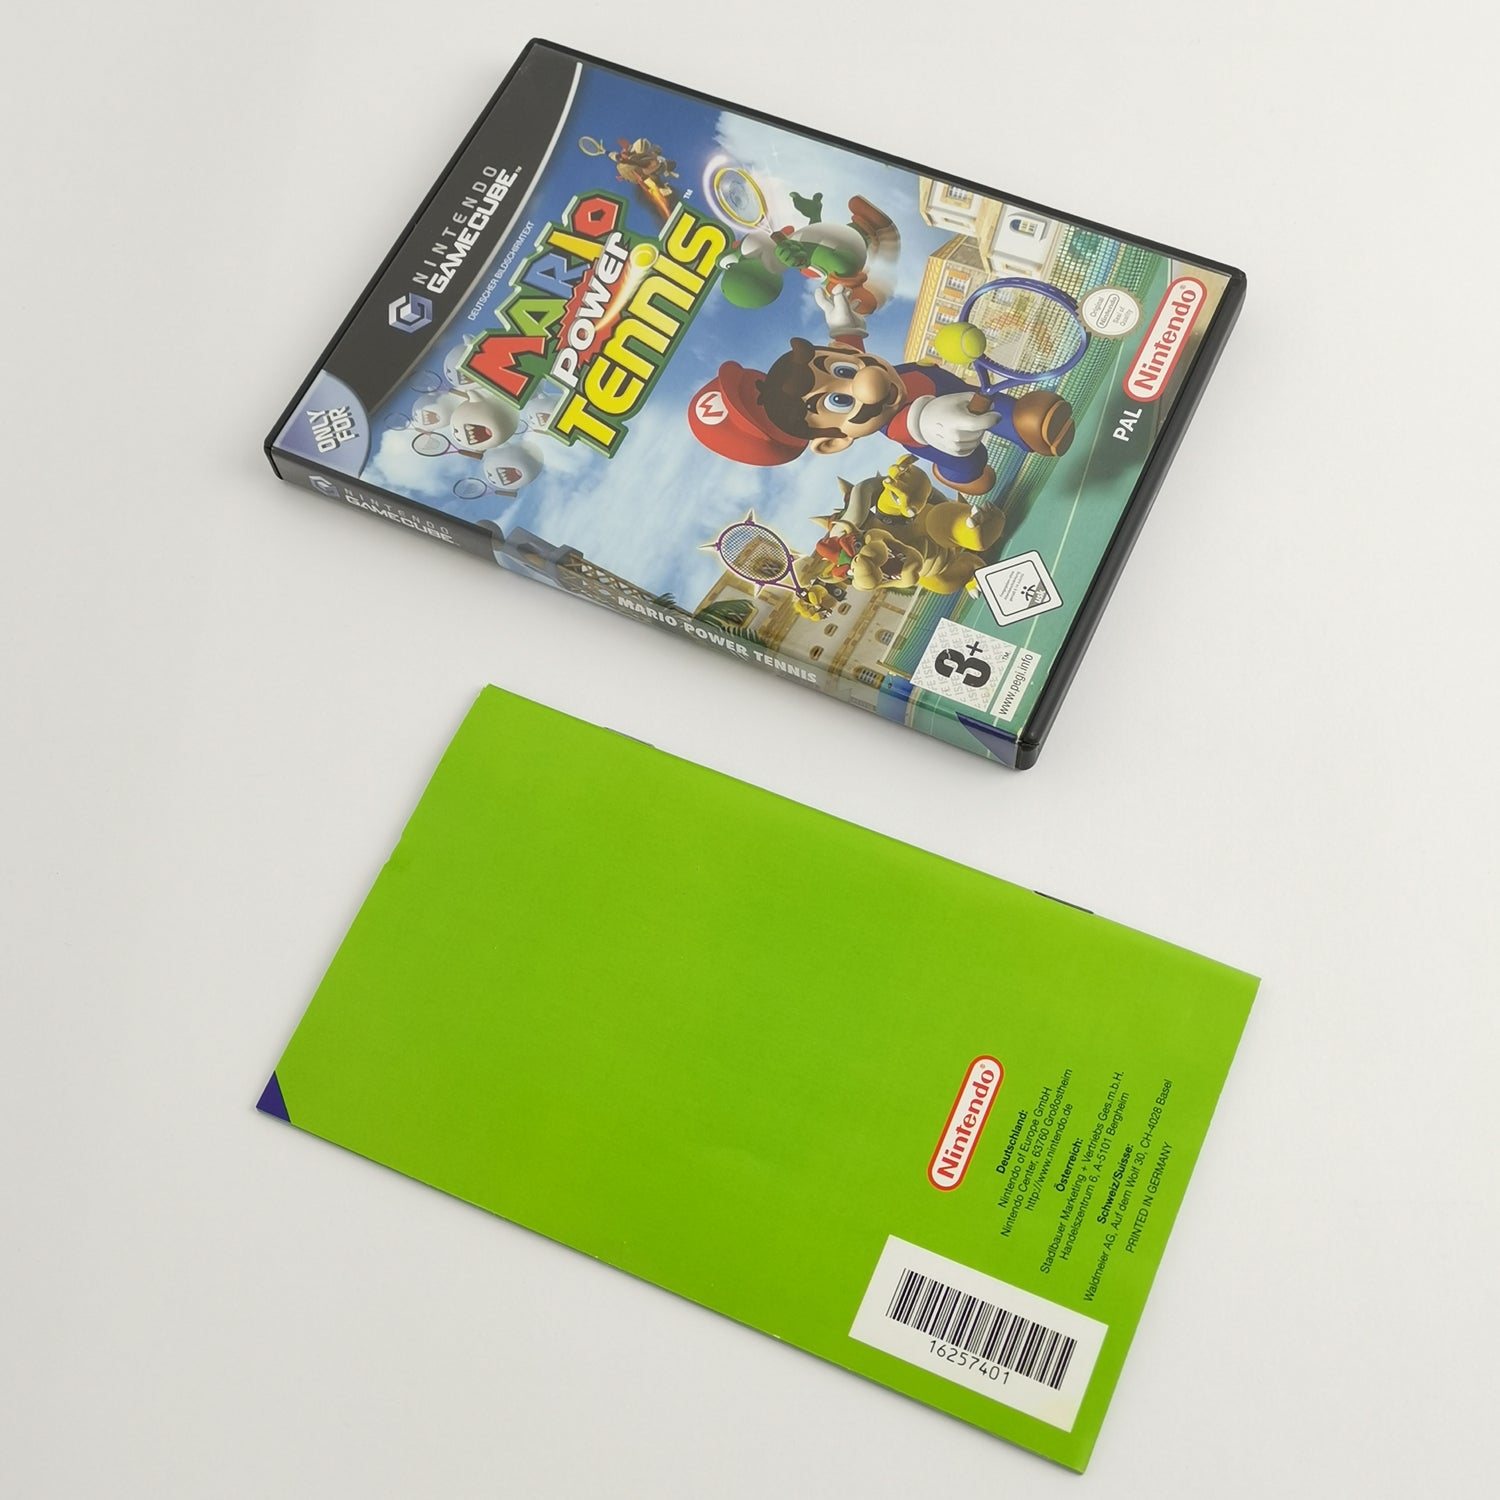 Nintendo Gamecube Game: Mario Power Tennis | German PAL version - original packaging